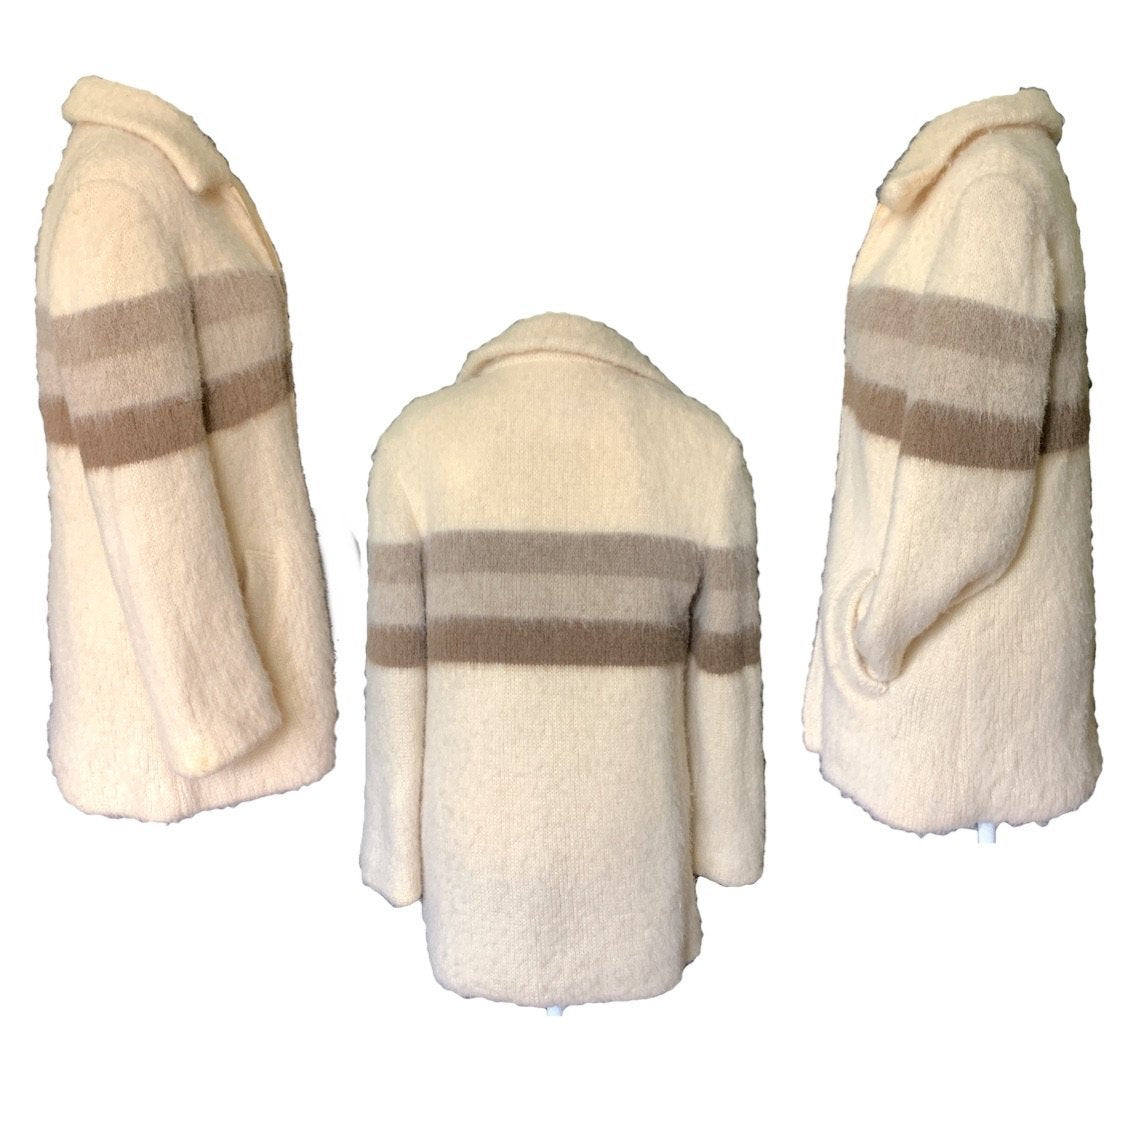 1970s Cream Wool Sweater Jacket by Eddie Bauer. Zip Up Cardigan with G